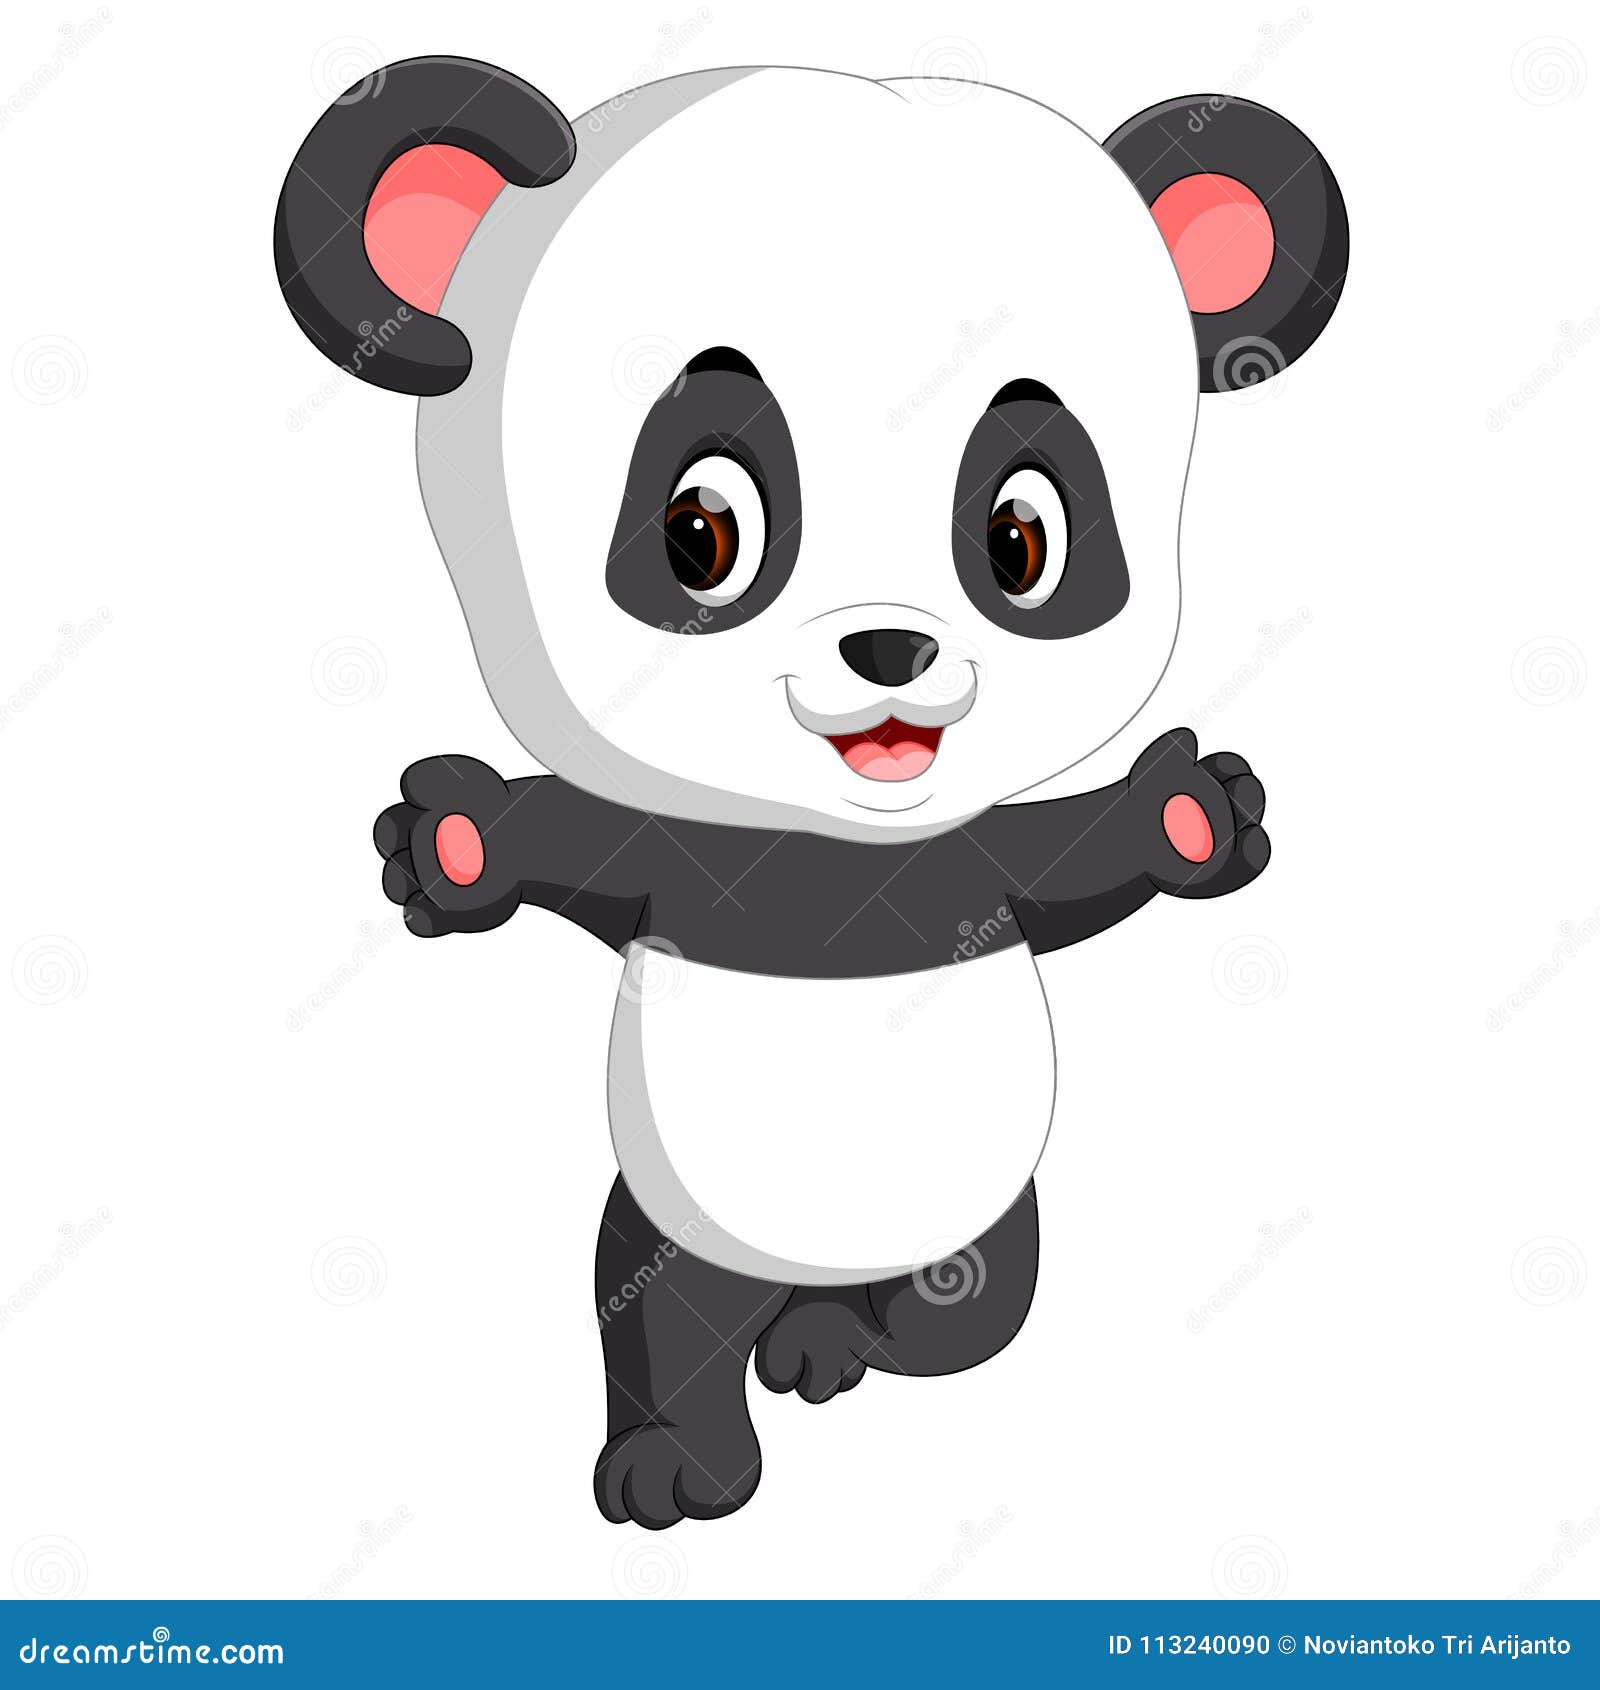 Cute baby panda cartoon stock vector. Illustration of mouth - 113240090